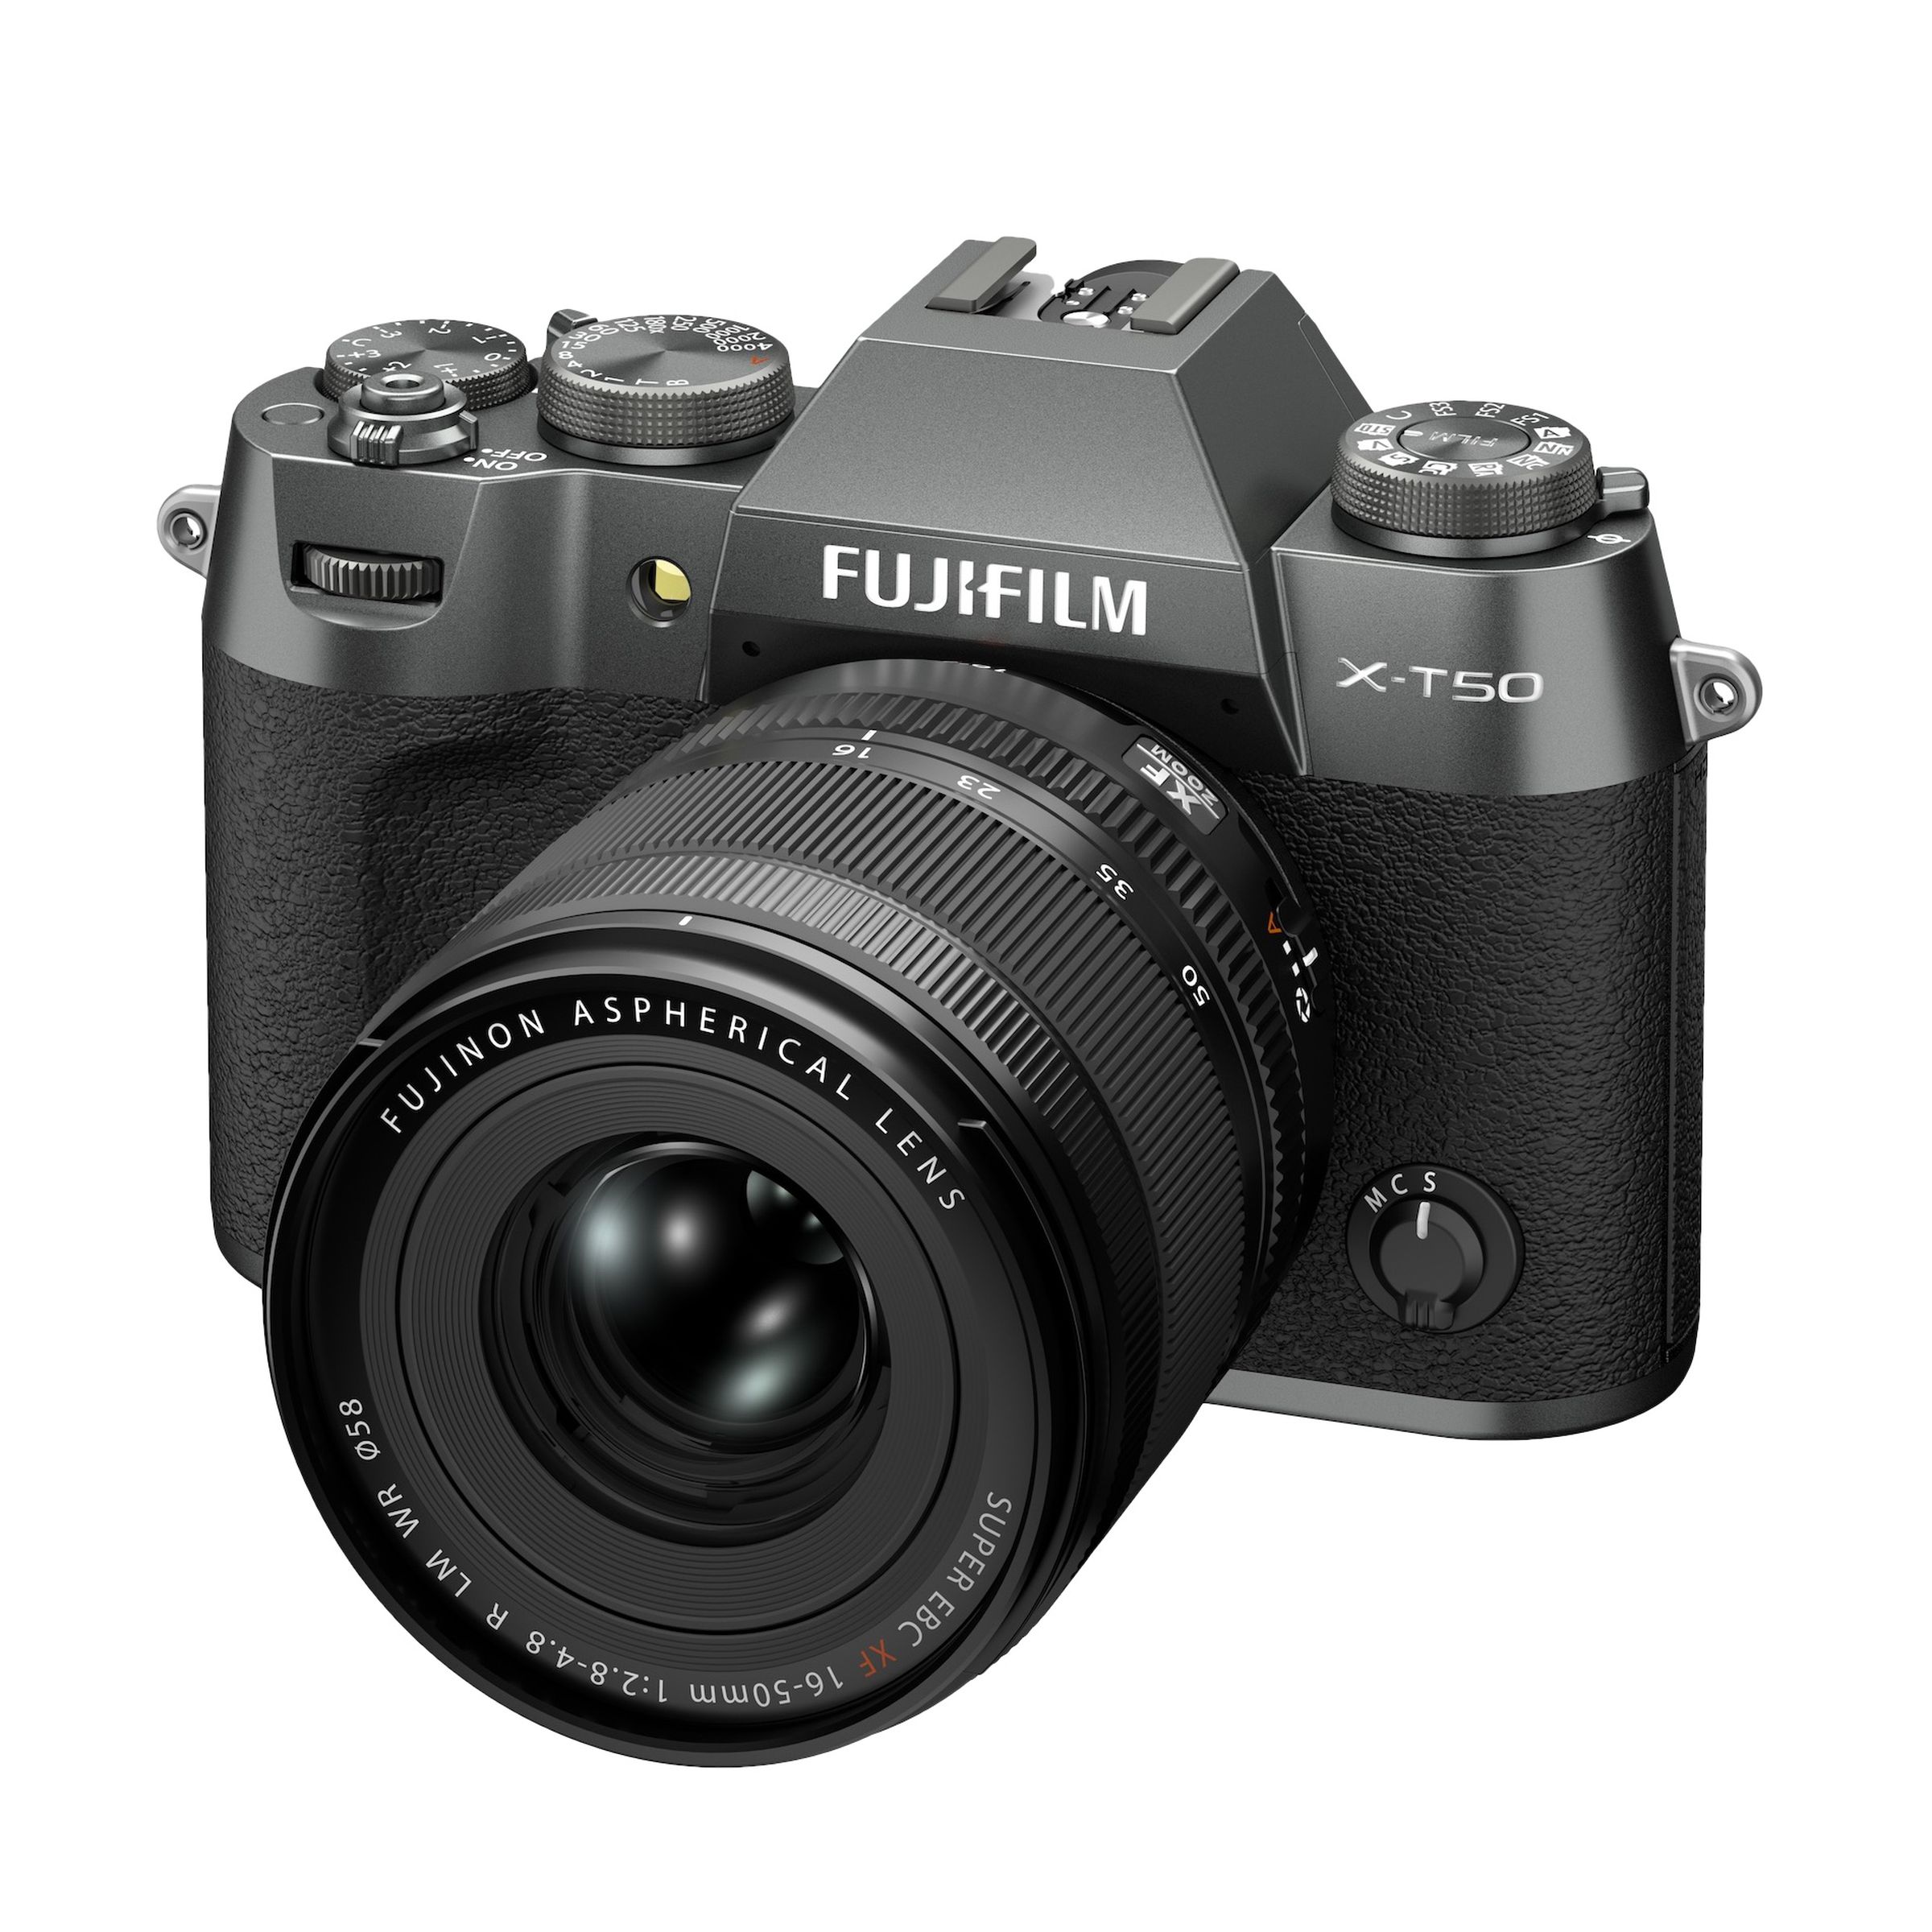 A marketing image of Fujifilm’s X-T50 camera.